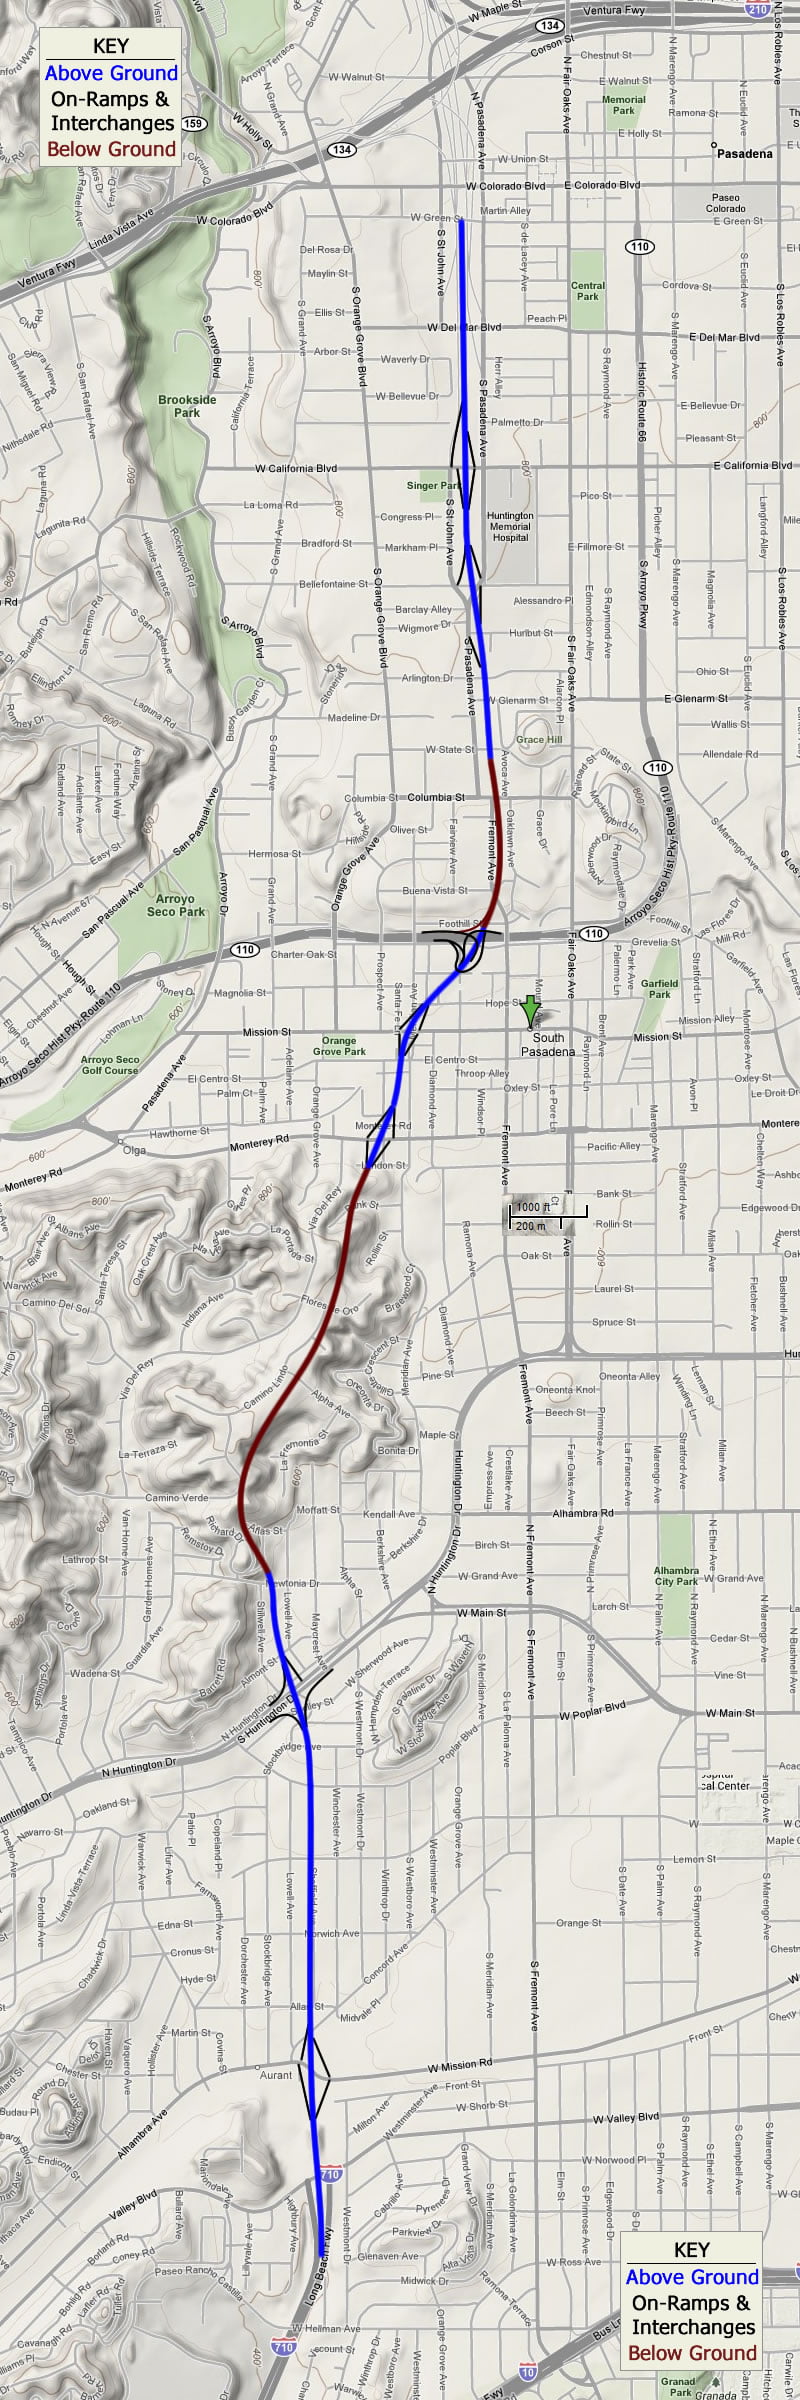 710 Extension Map through El Sereno, South Pasadena and Pasadena